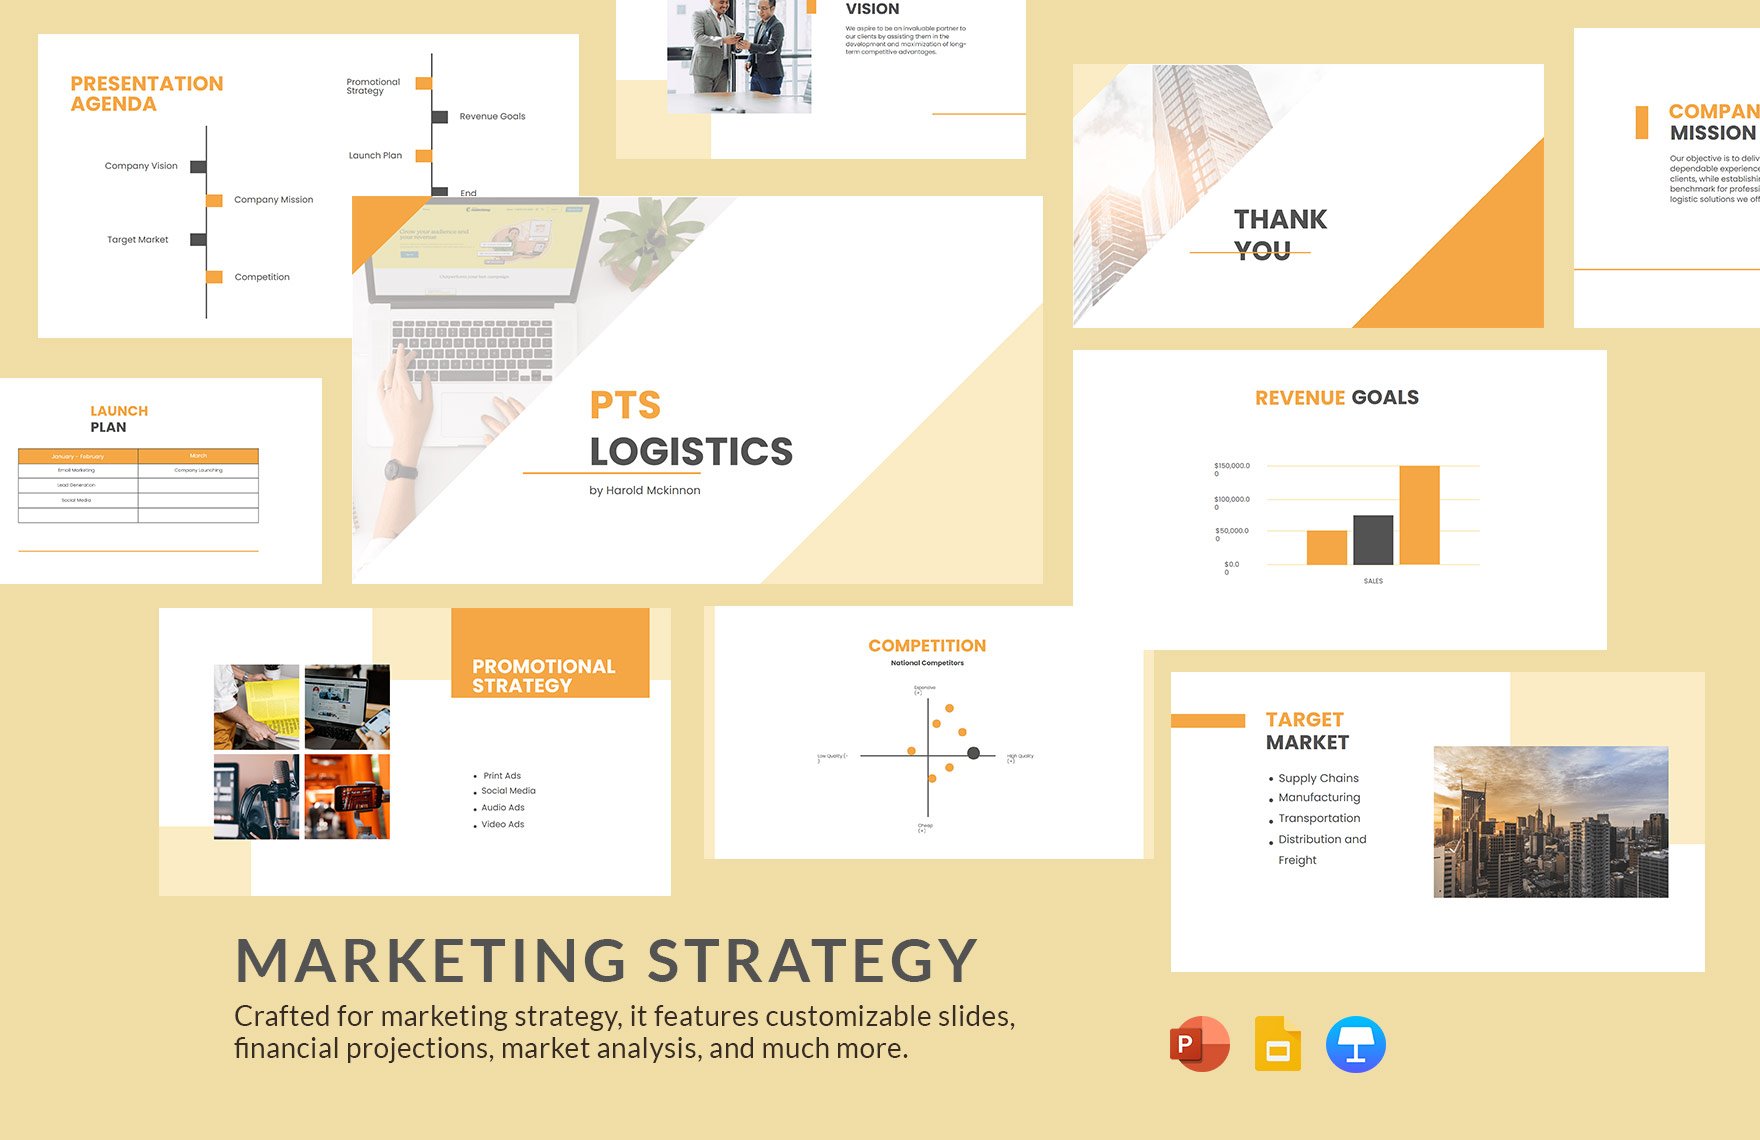 Marketing Strategy Presentation Template